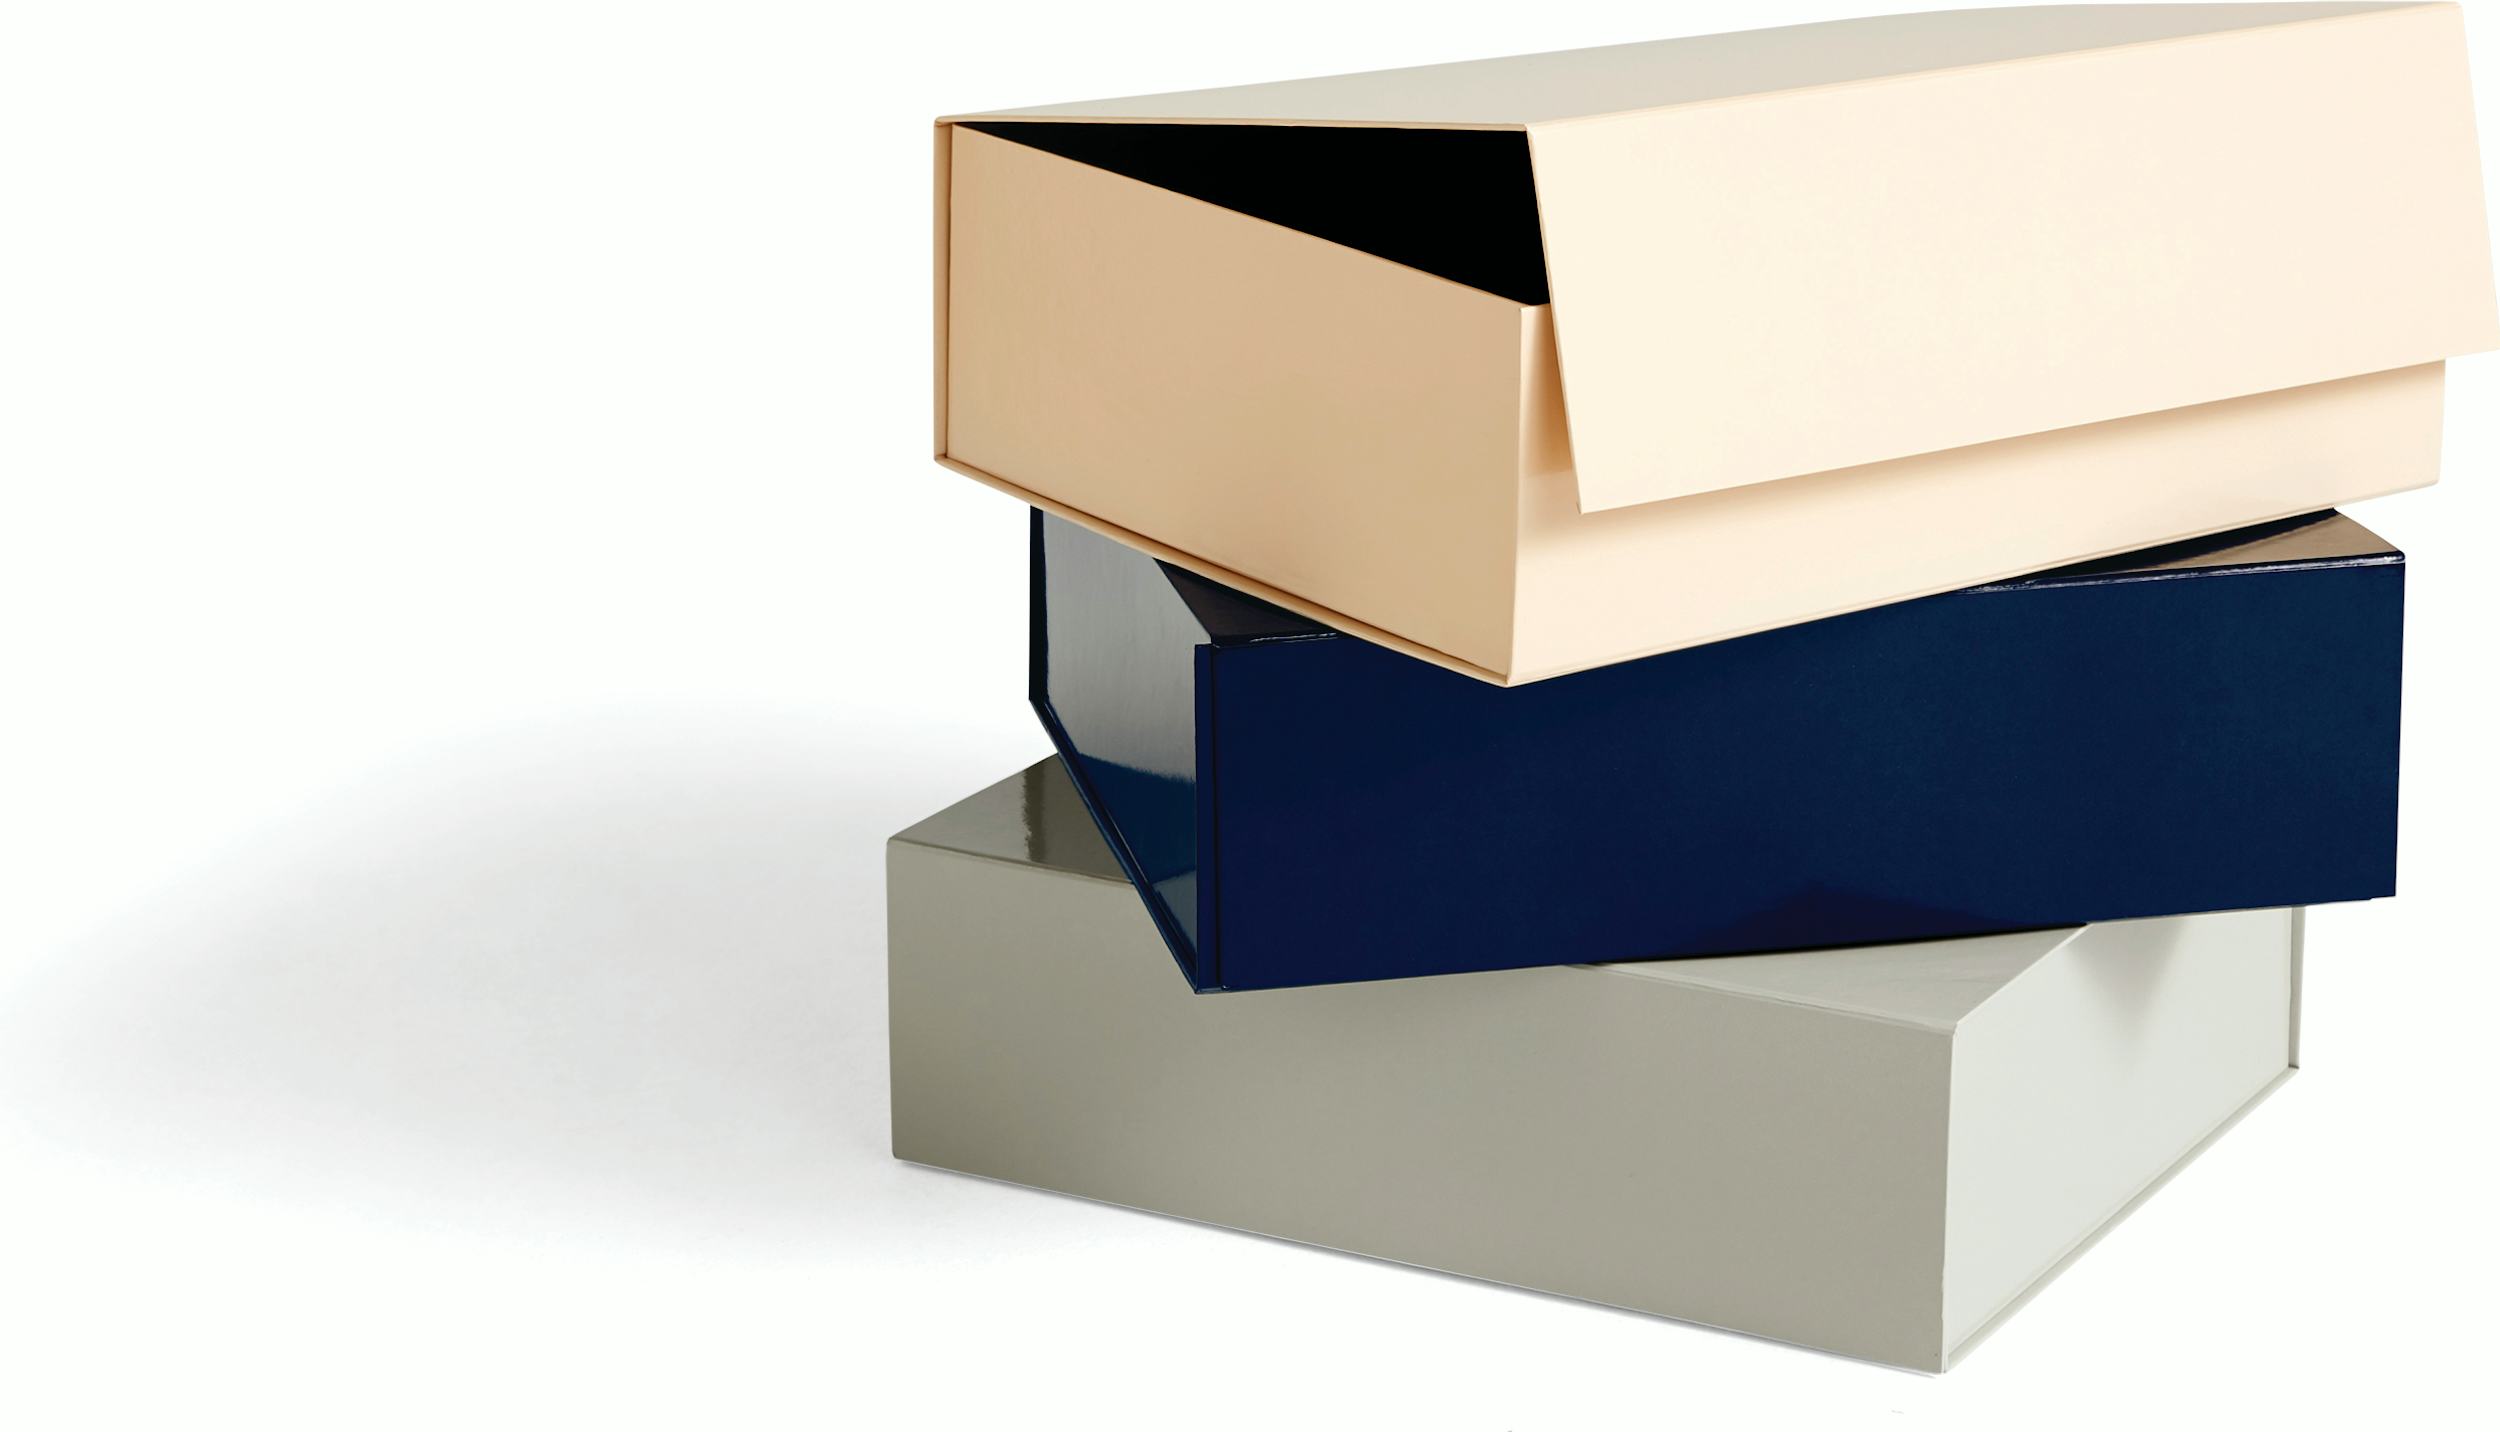 Colour Crate Storage Box S, 17x26,5 cm, Blush - HAY @ RoyalDesign